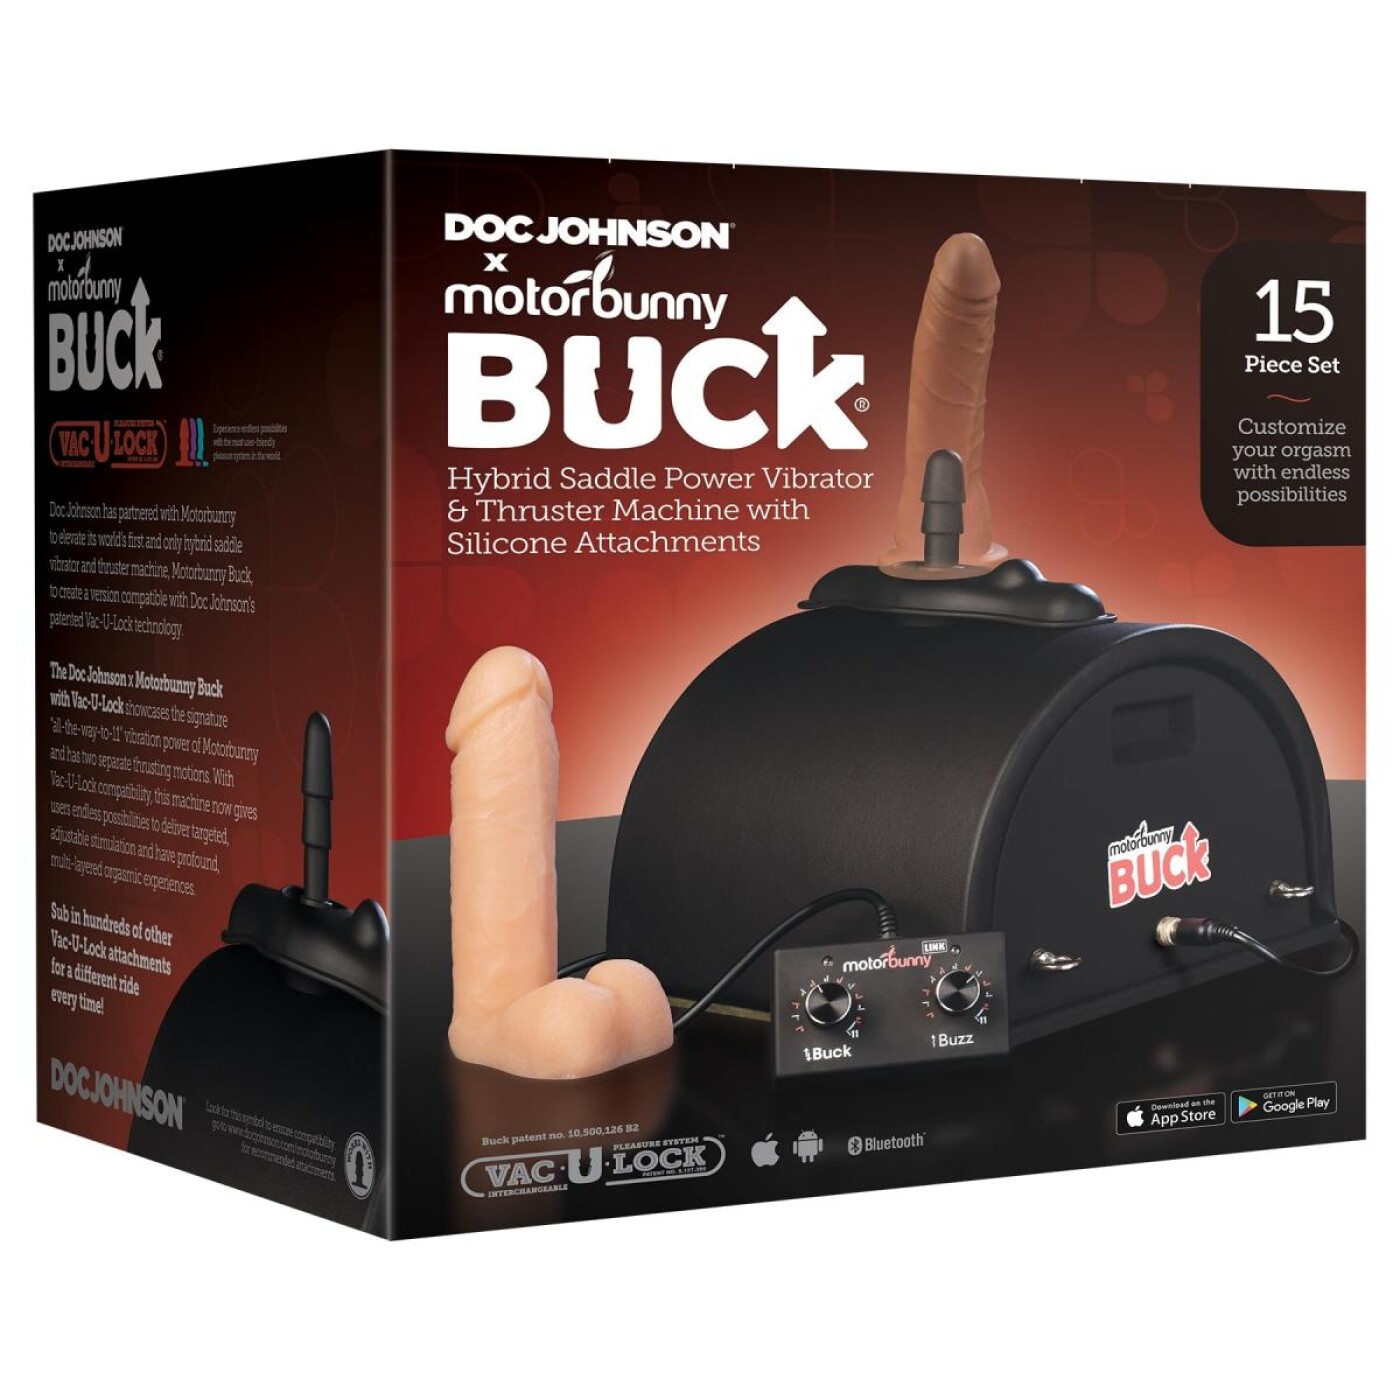 Doc Johnson x MotorBunny - Buck with Vac-U-Lock - Image 5.